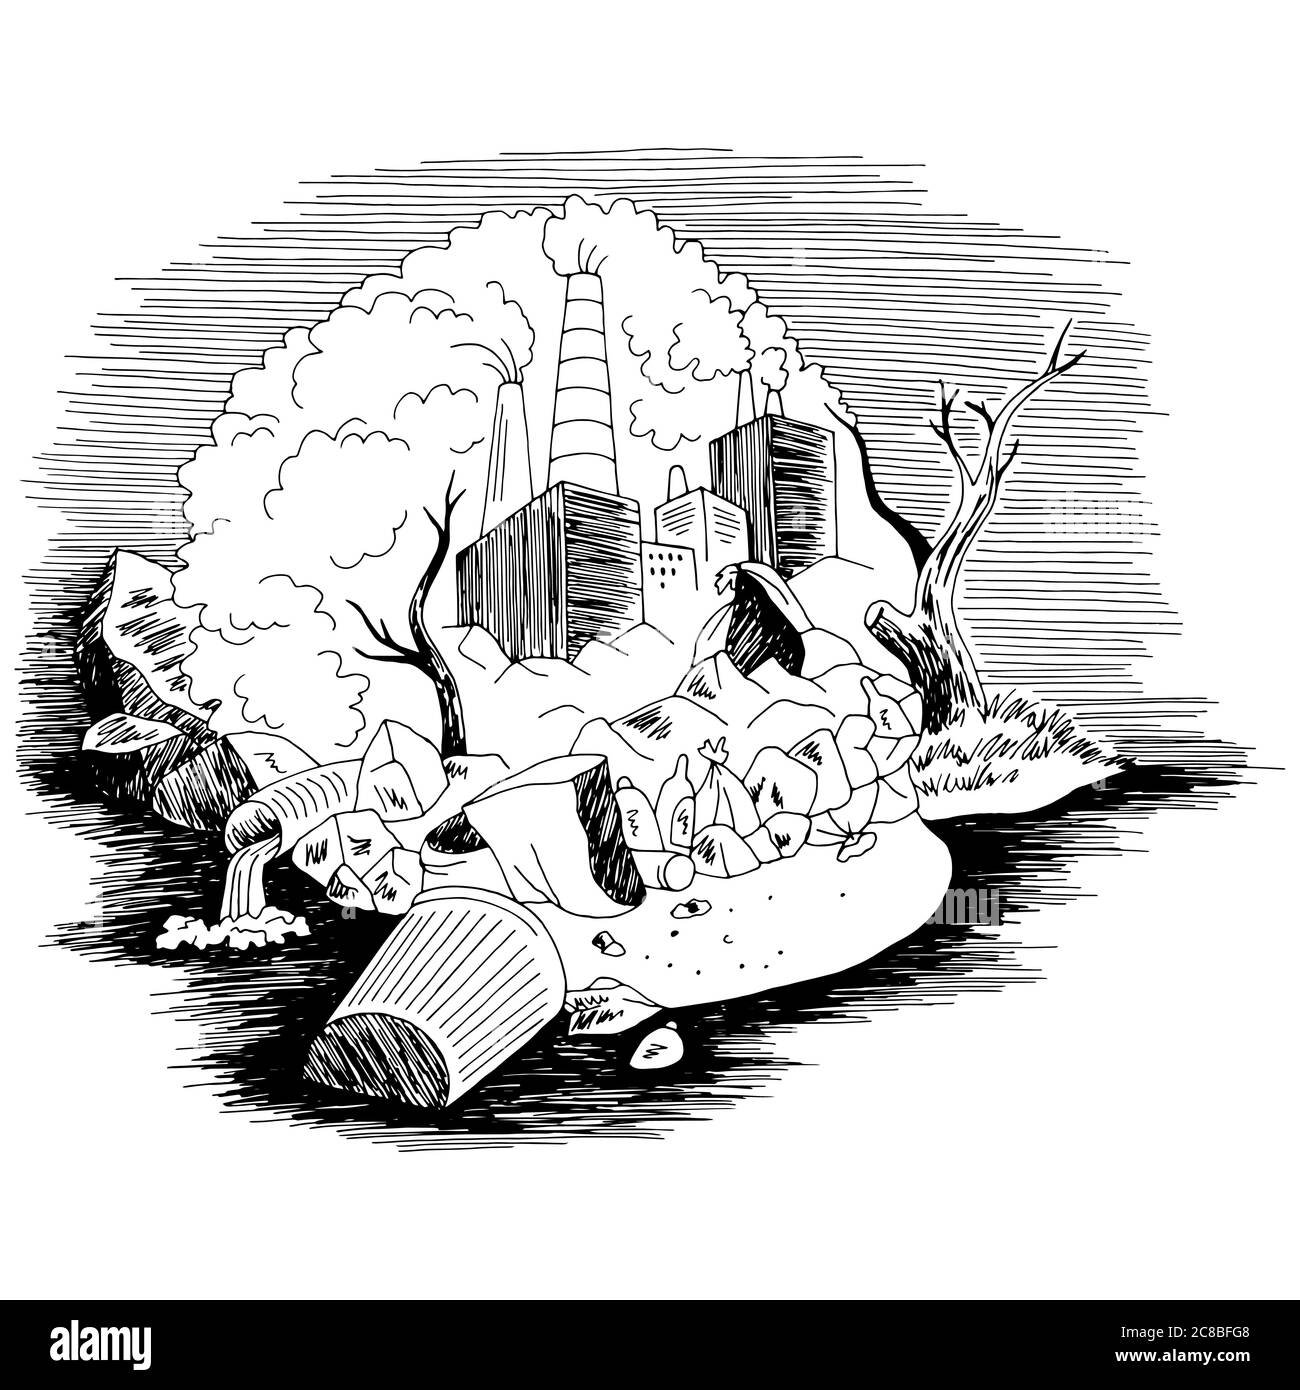 Schädel Ökologie Problem Müll Fabrik Dampf Verschmutzung Grafik schwarz weiß Landschaft Skizze Illustration Vektor Stock Vektor